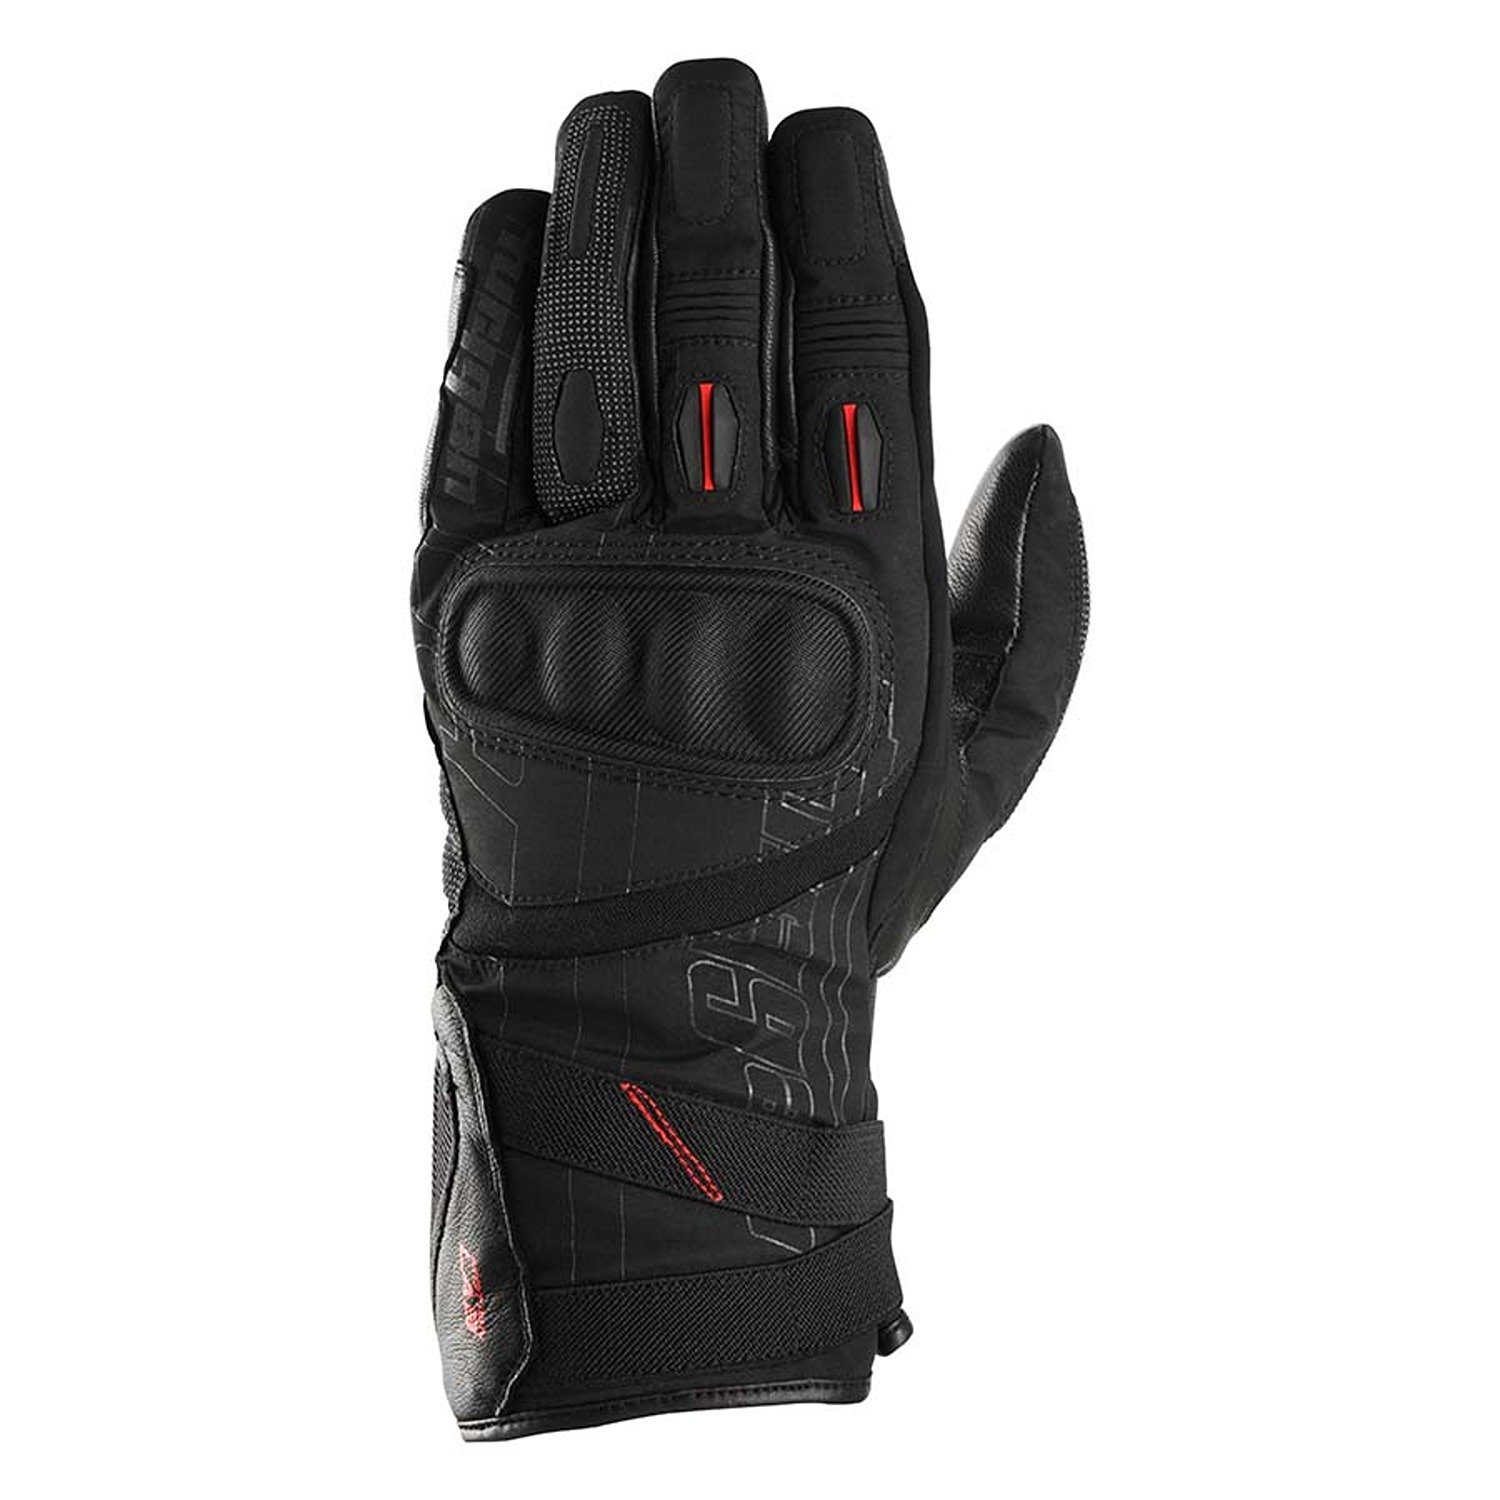 Image of Furygan Nomad Gloves Black Size L ID 3435980373344